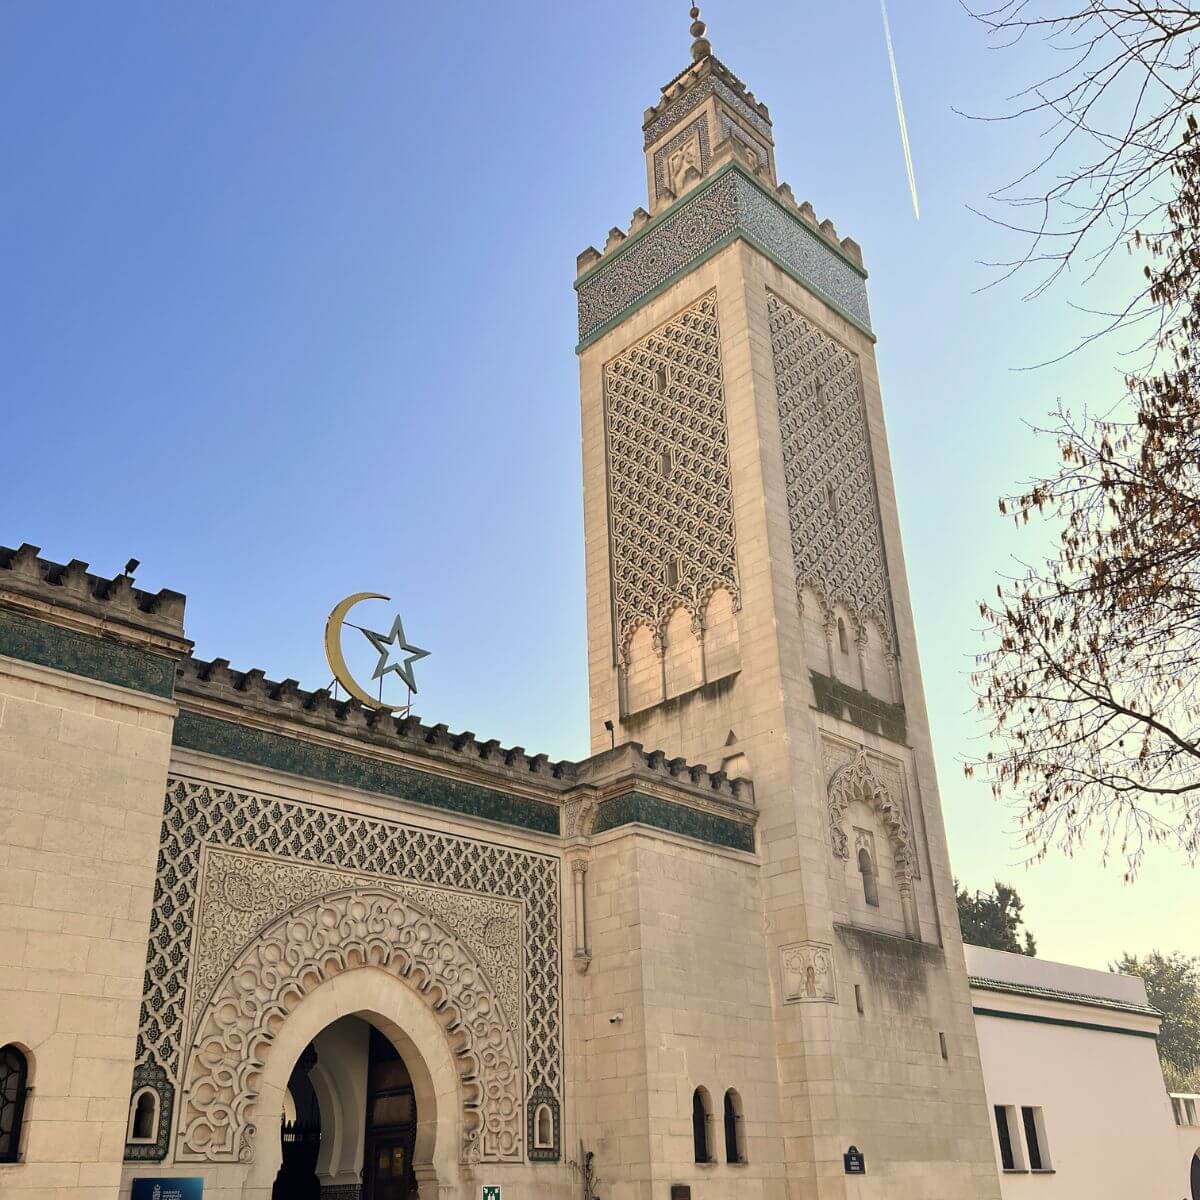 Visiting the Grand Mosque of Paris: A Unique Cultural Experience